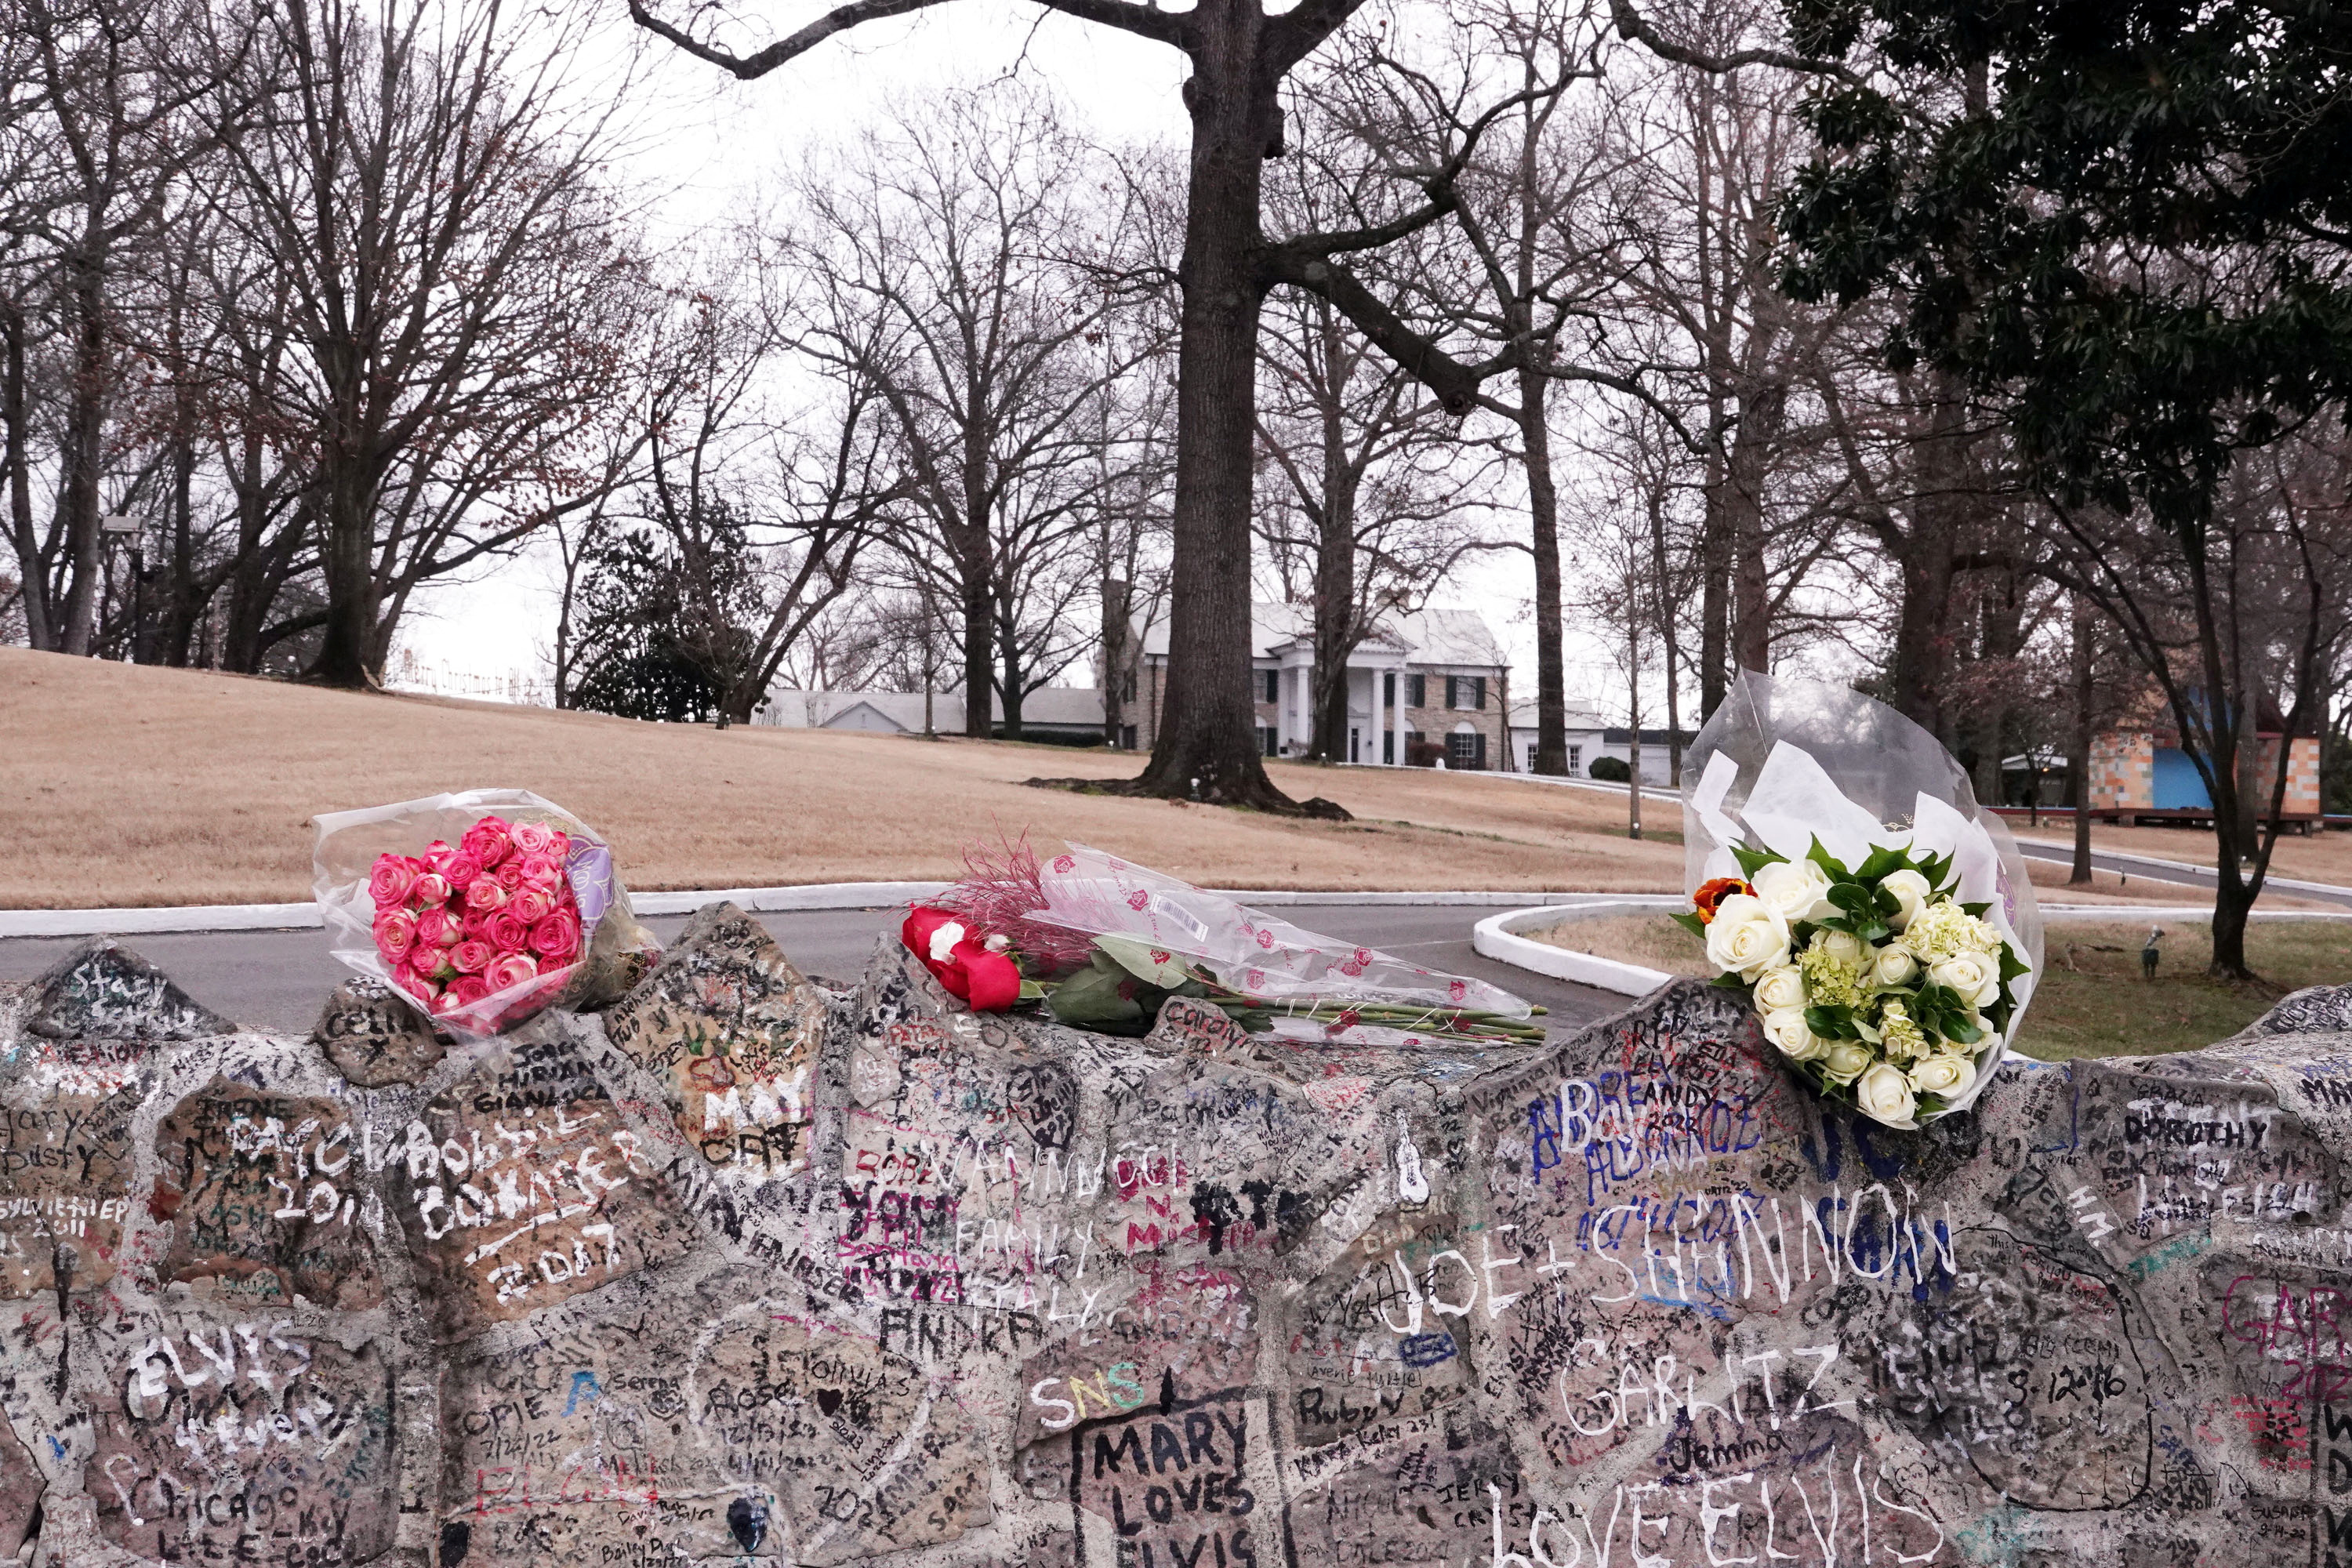  Lisa Marie Presley, hija de Elvis Presley, será enterrada en Graceland, Memphis, Tennessee (Reuters)